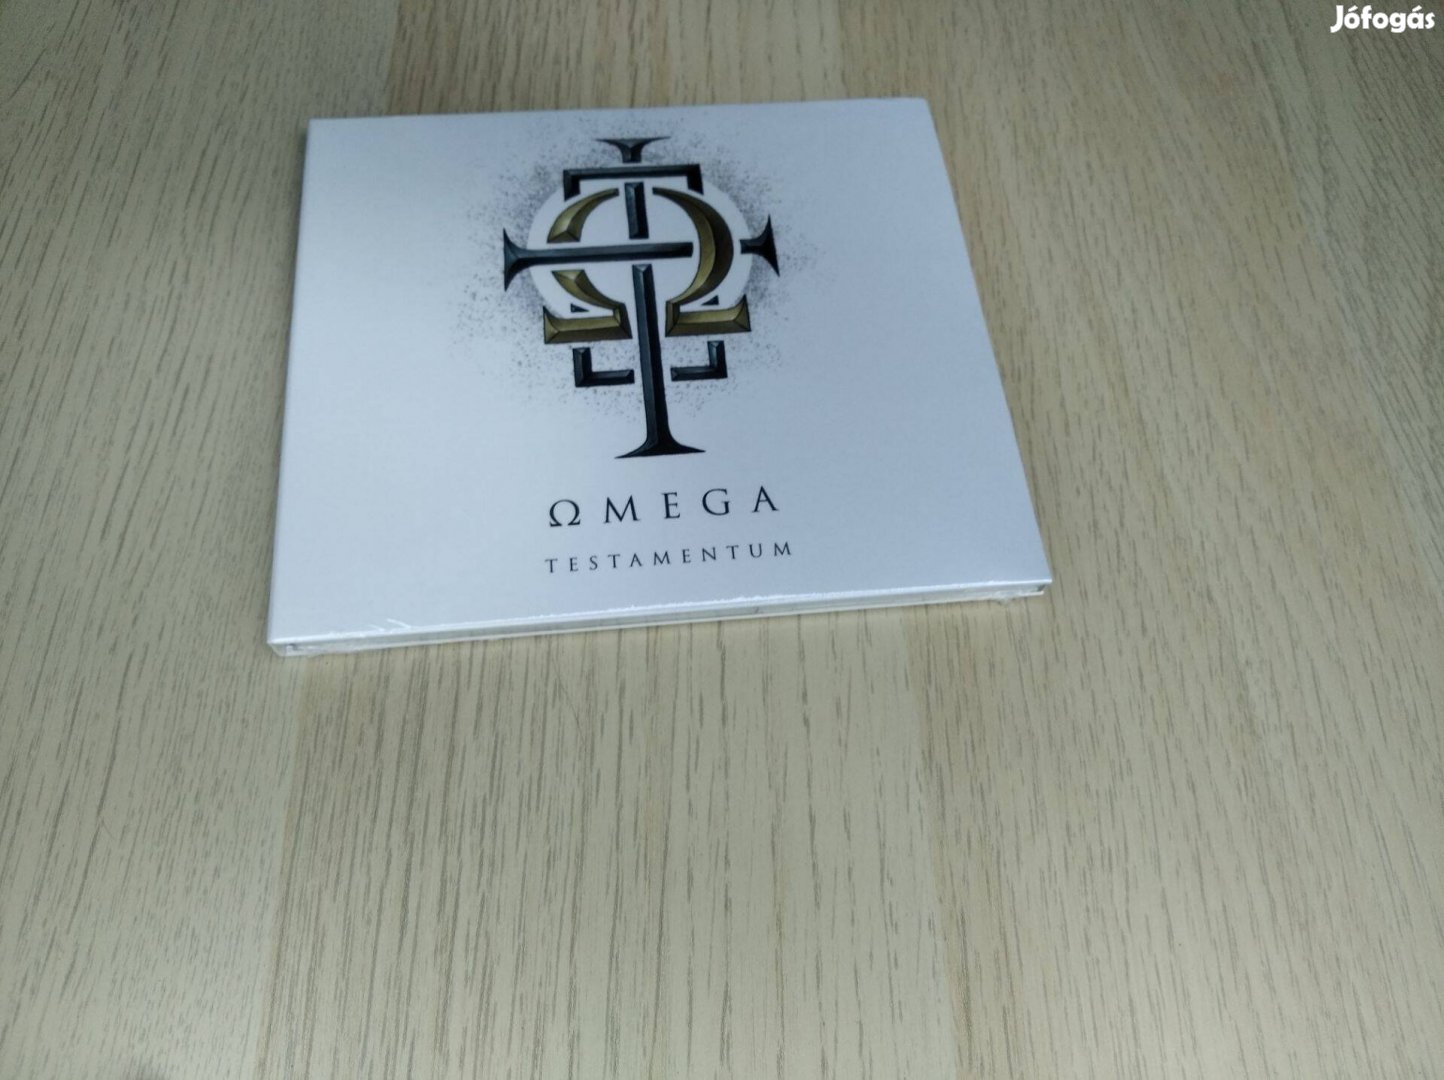 Omega - Testamentum / CD (Bontatlan)